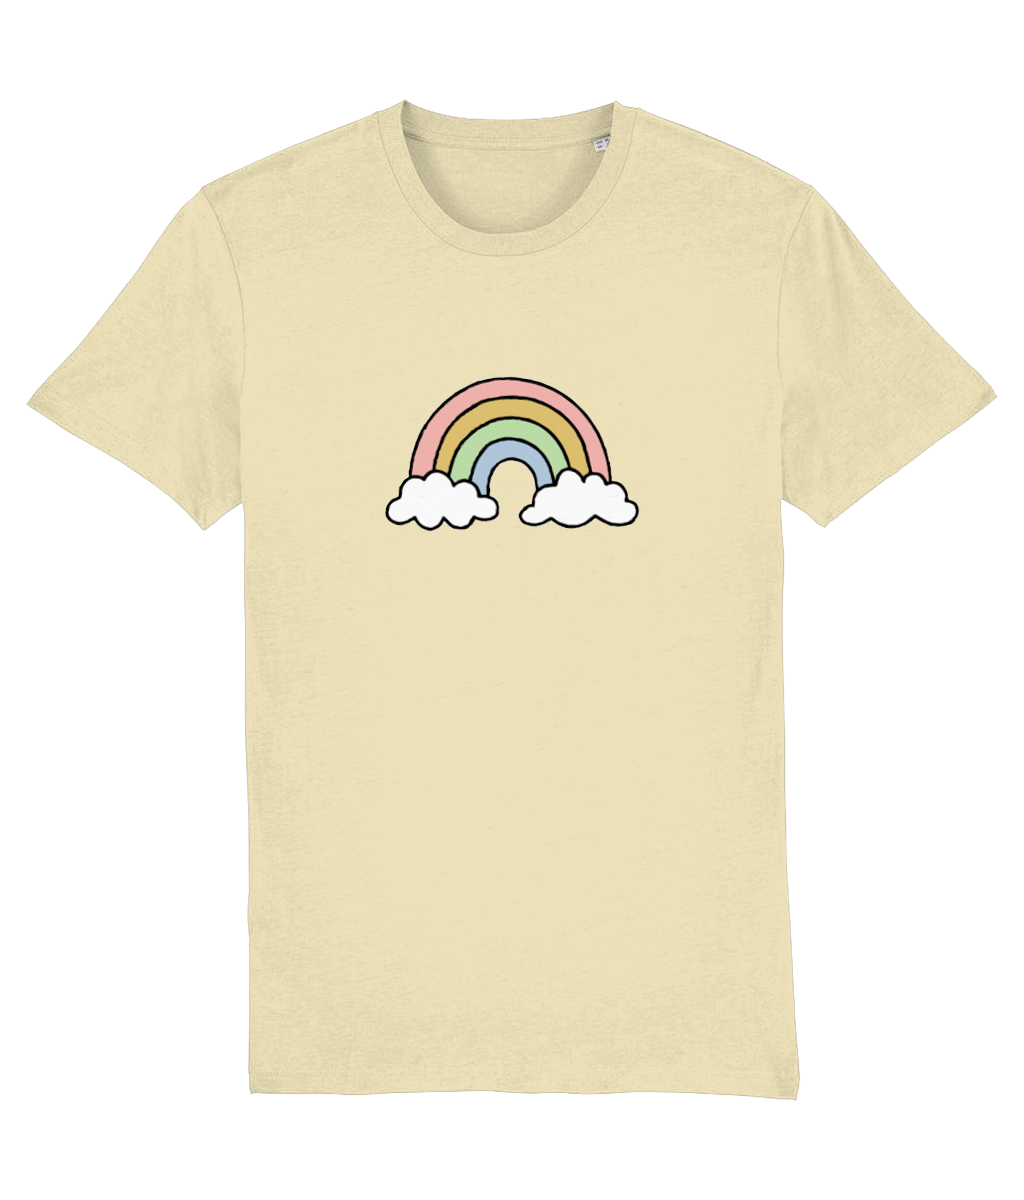 Rainbow - Adult T-Shirt - Multi Colour Option